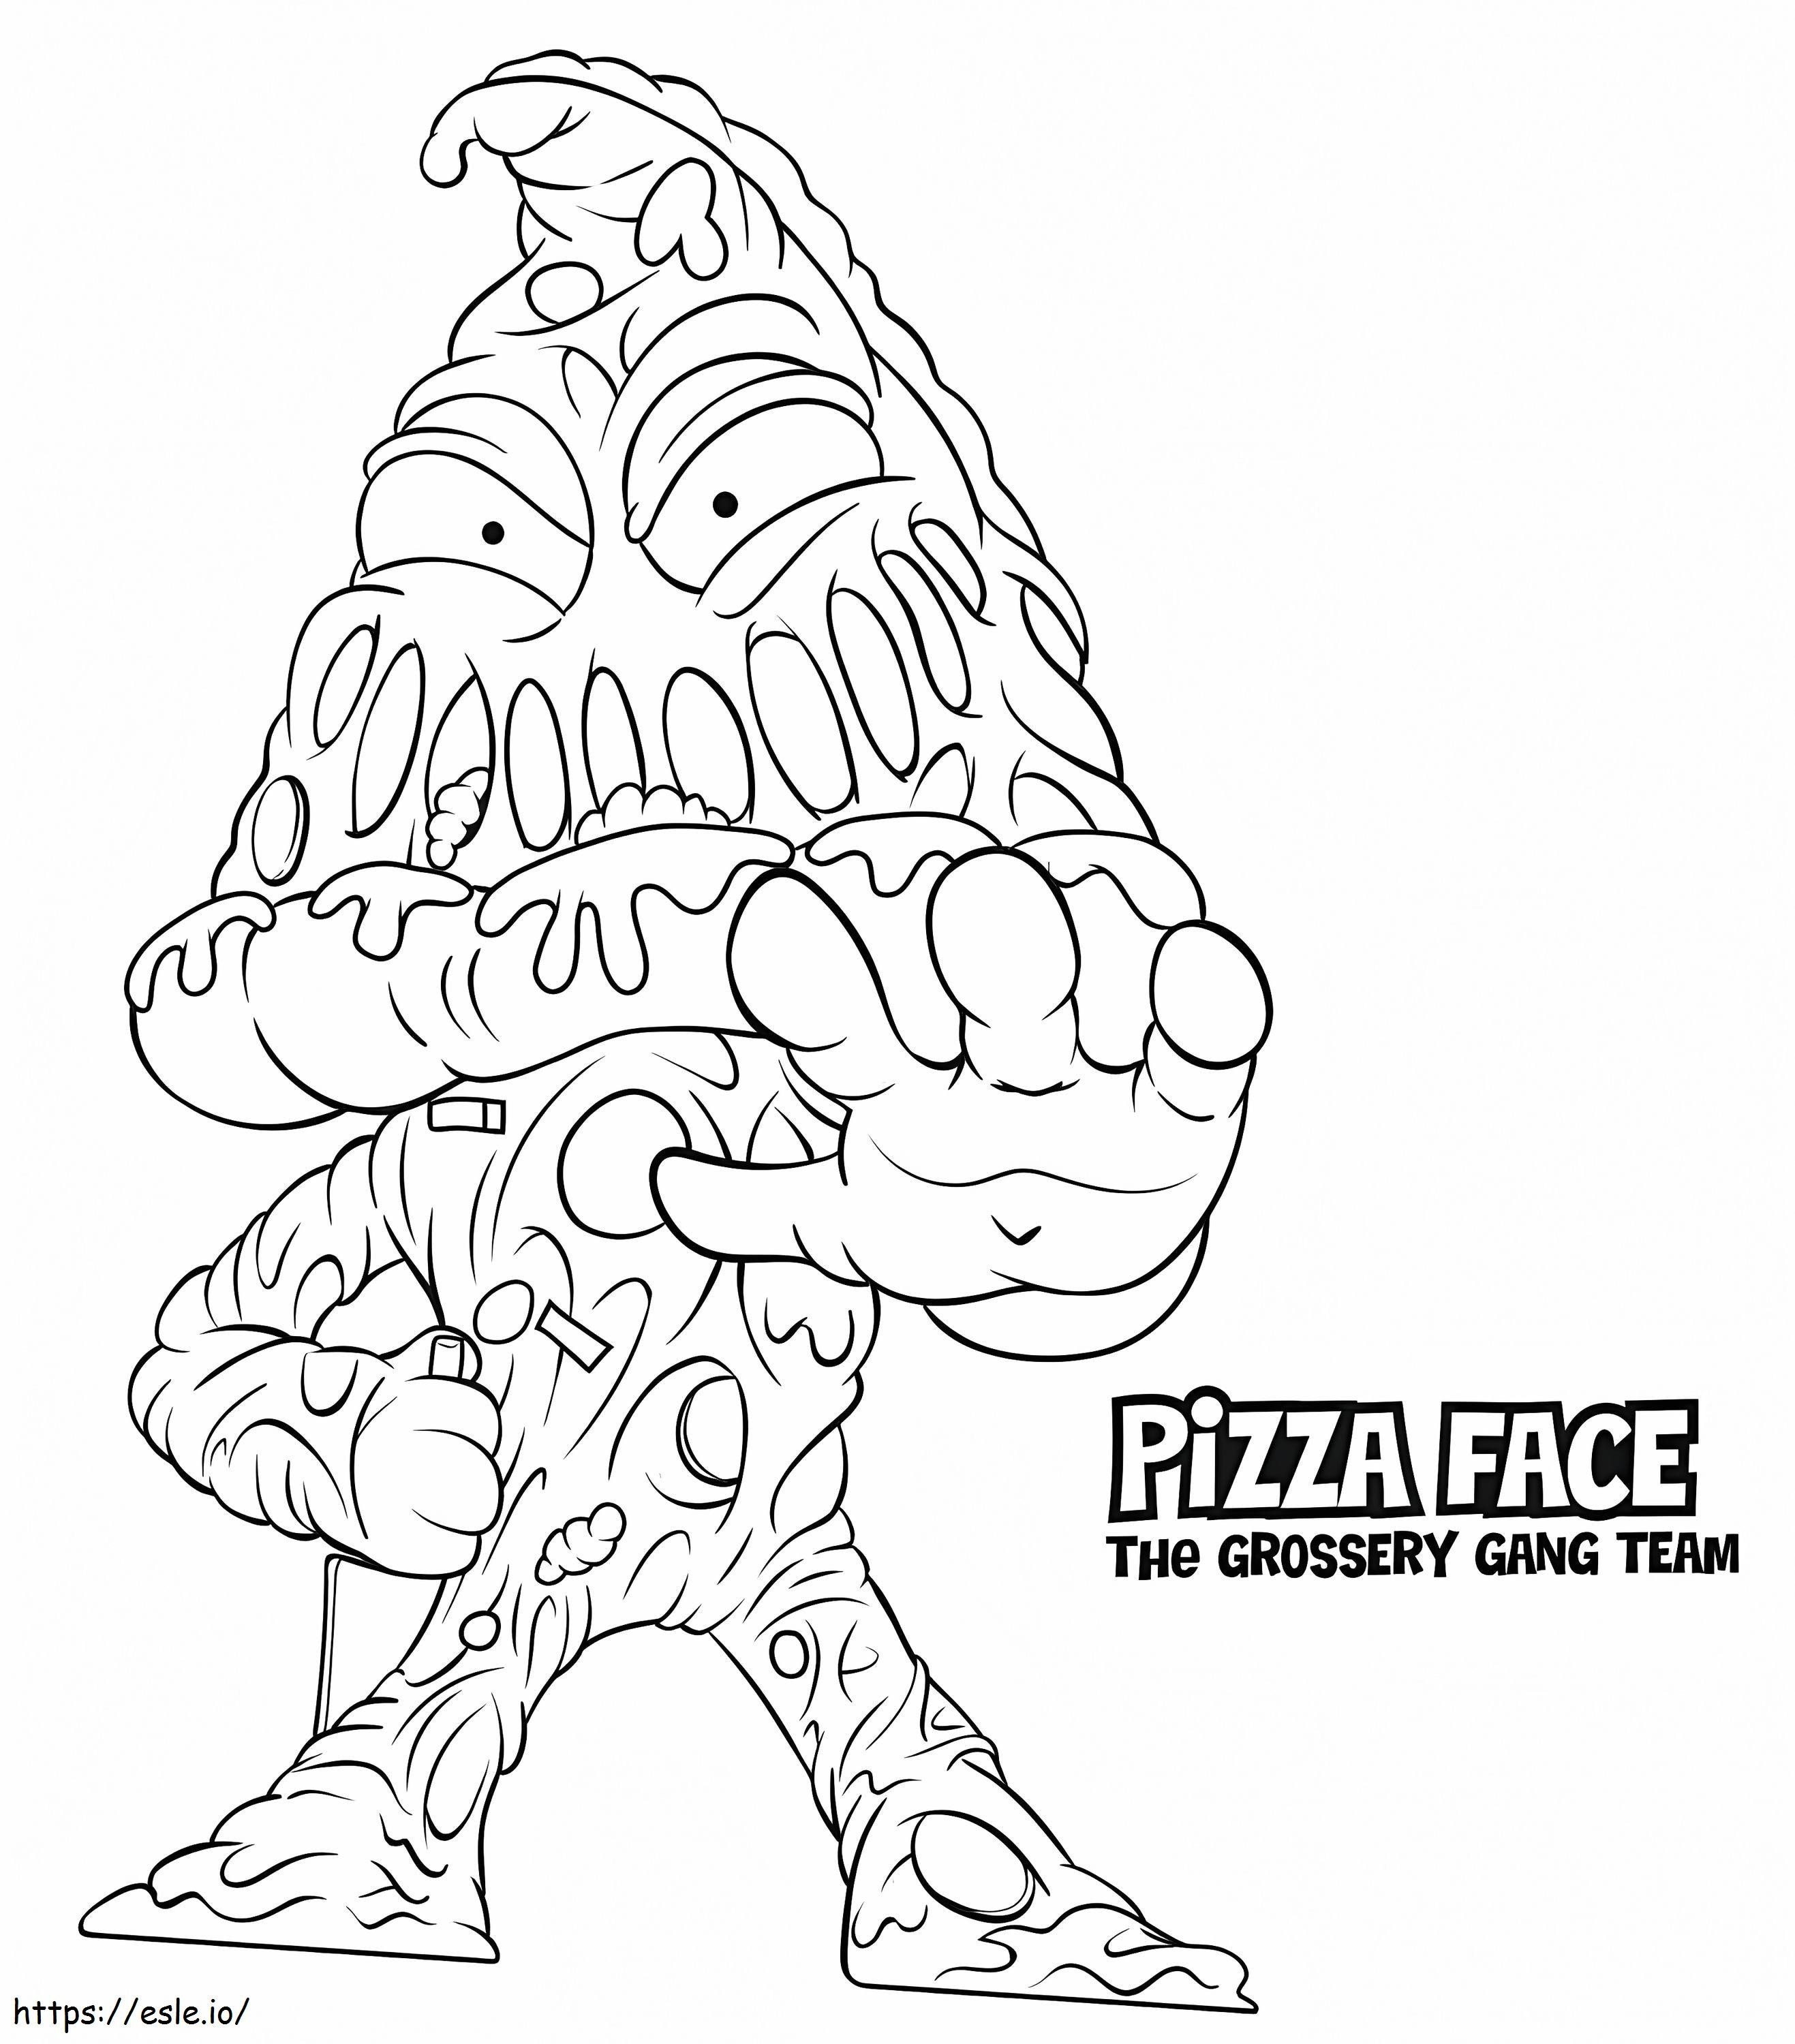 Pizza Face Grossery Gang kleurplaat kleurplaat